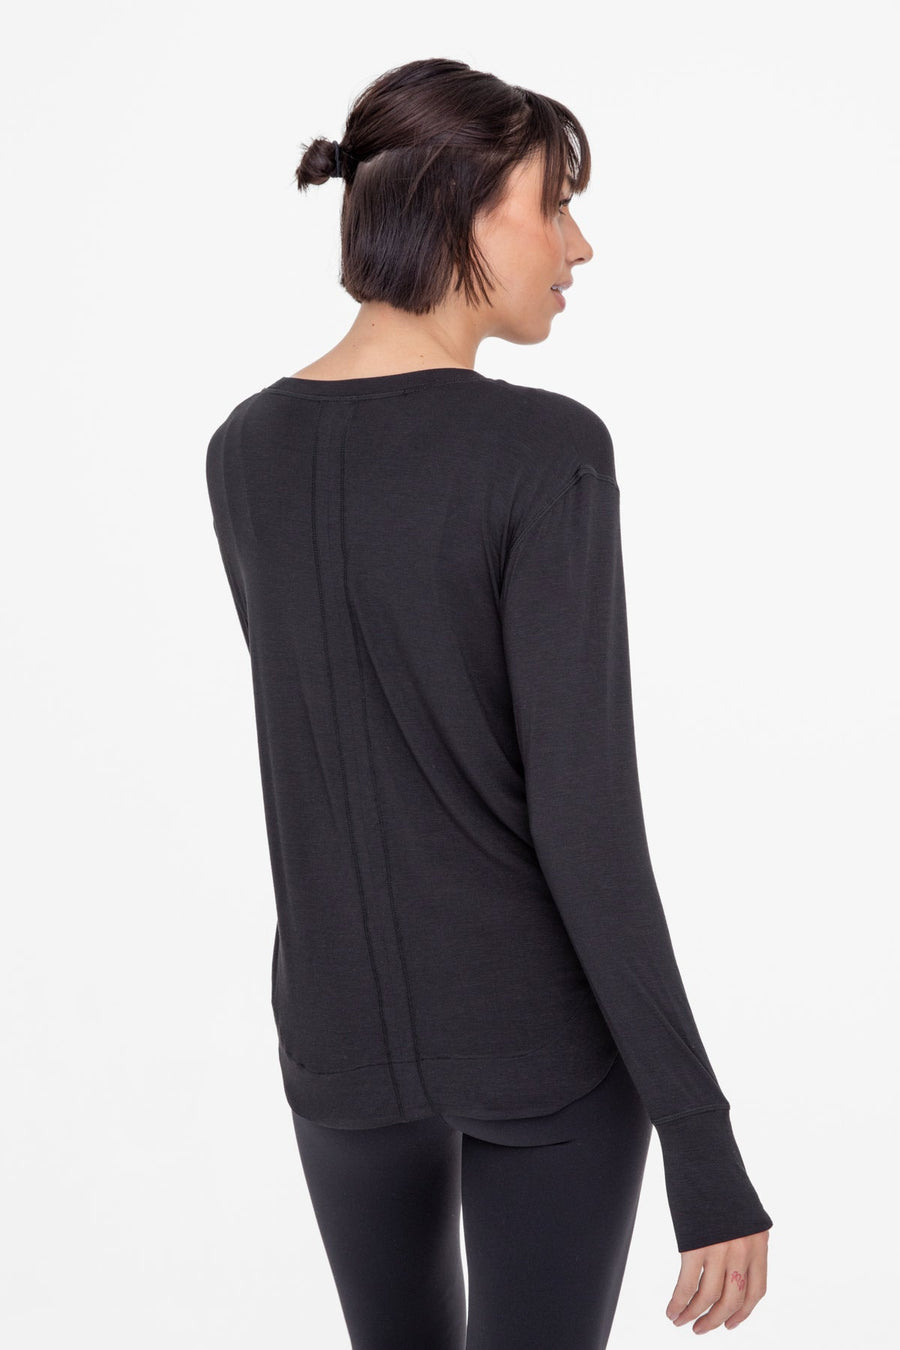 Mono B Women's Longline Deep V-Neck Pocket Shirt in Olive Size XL - NWT